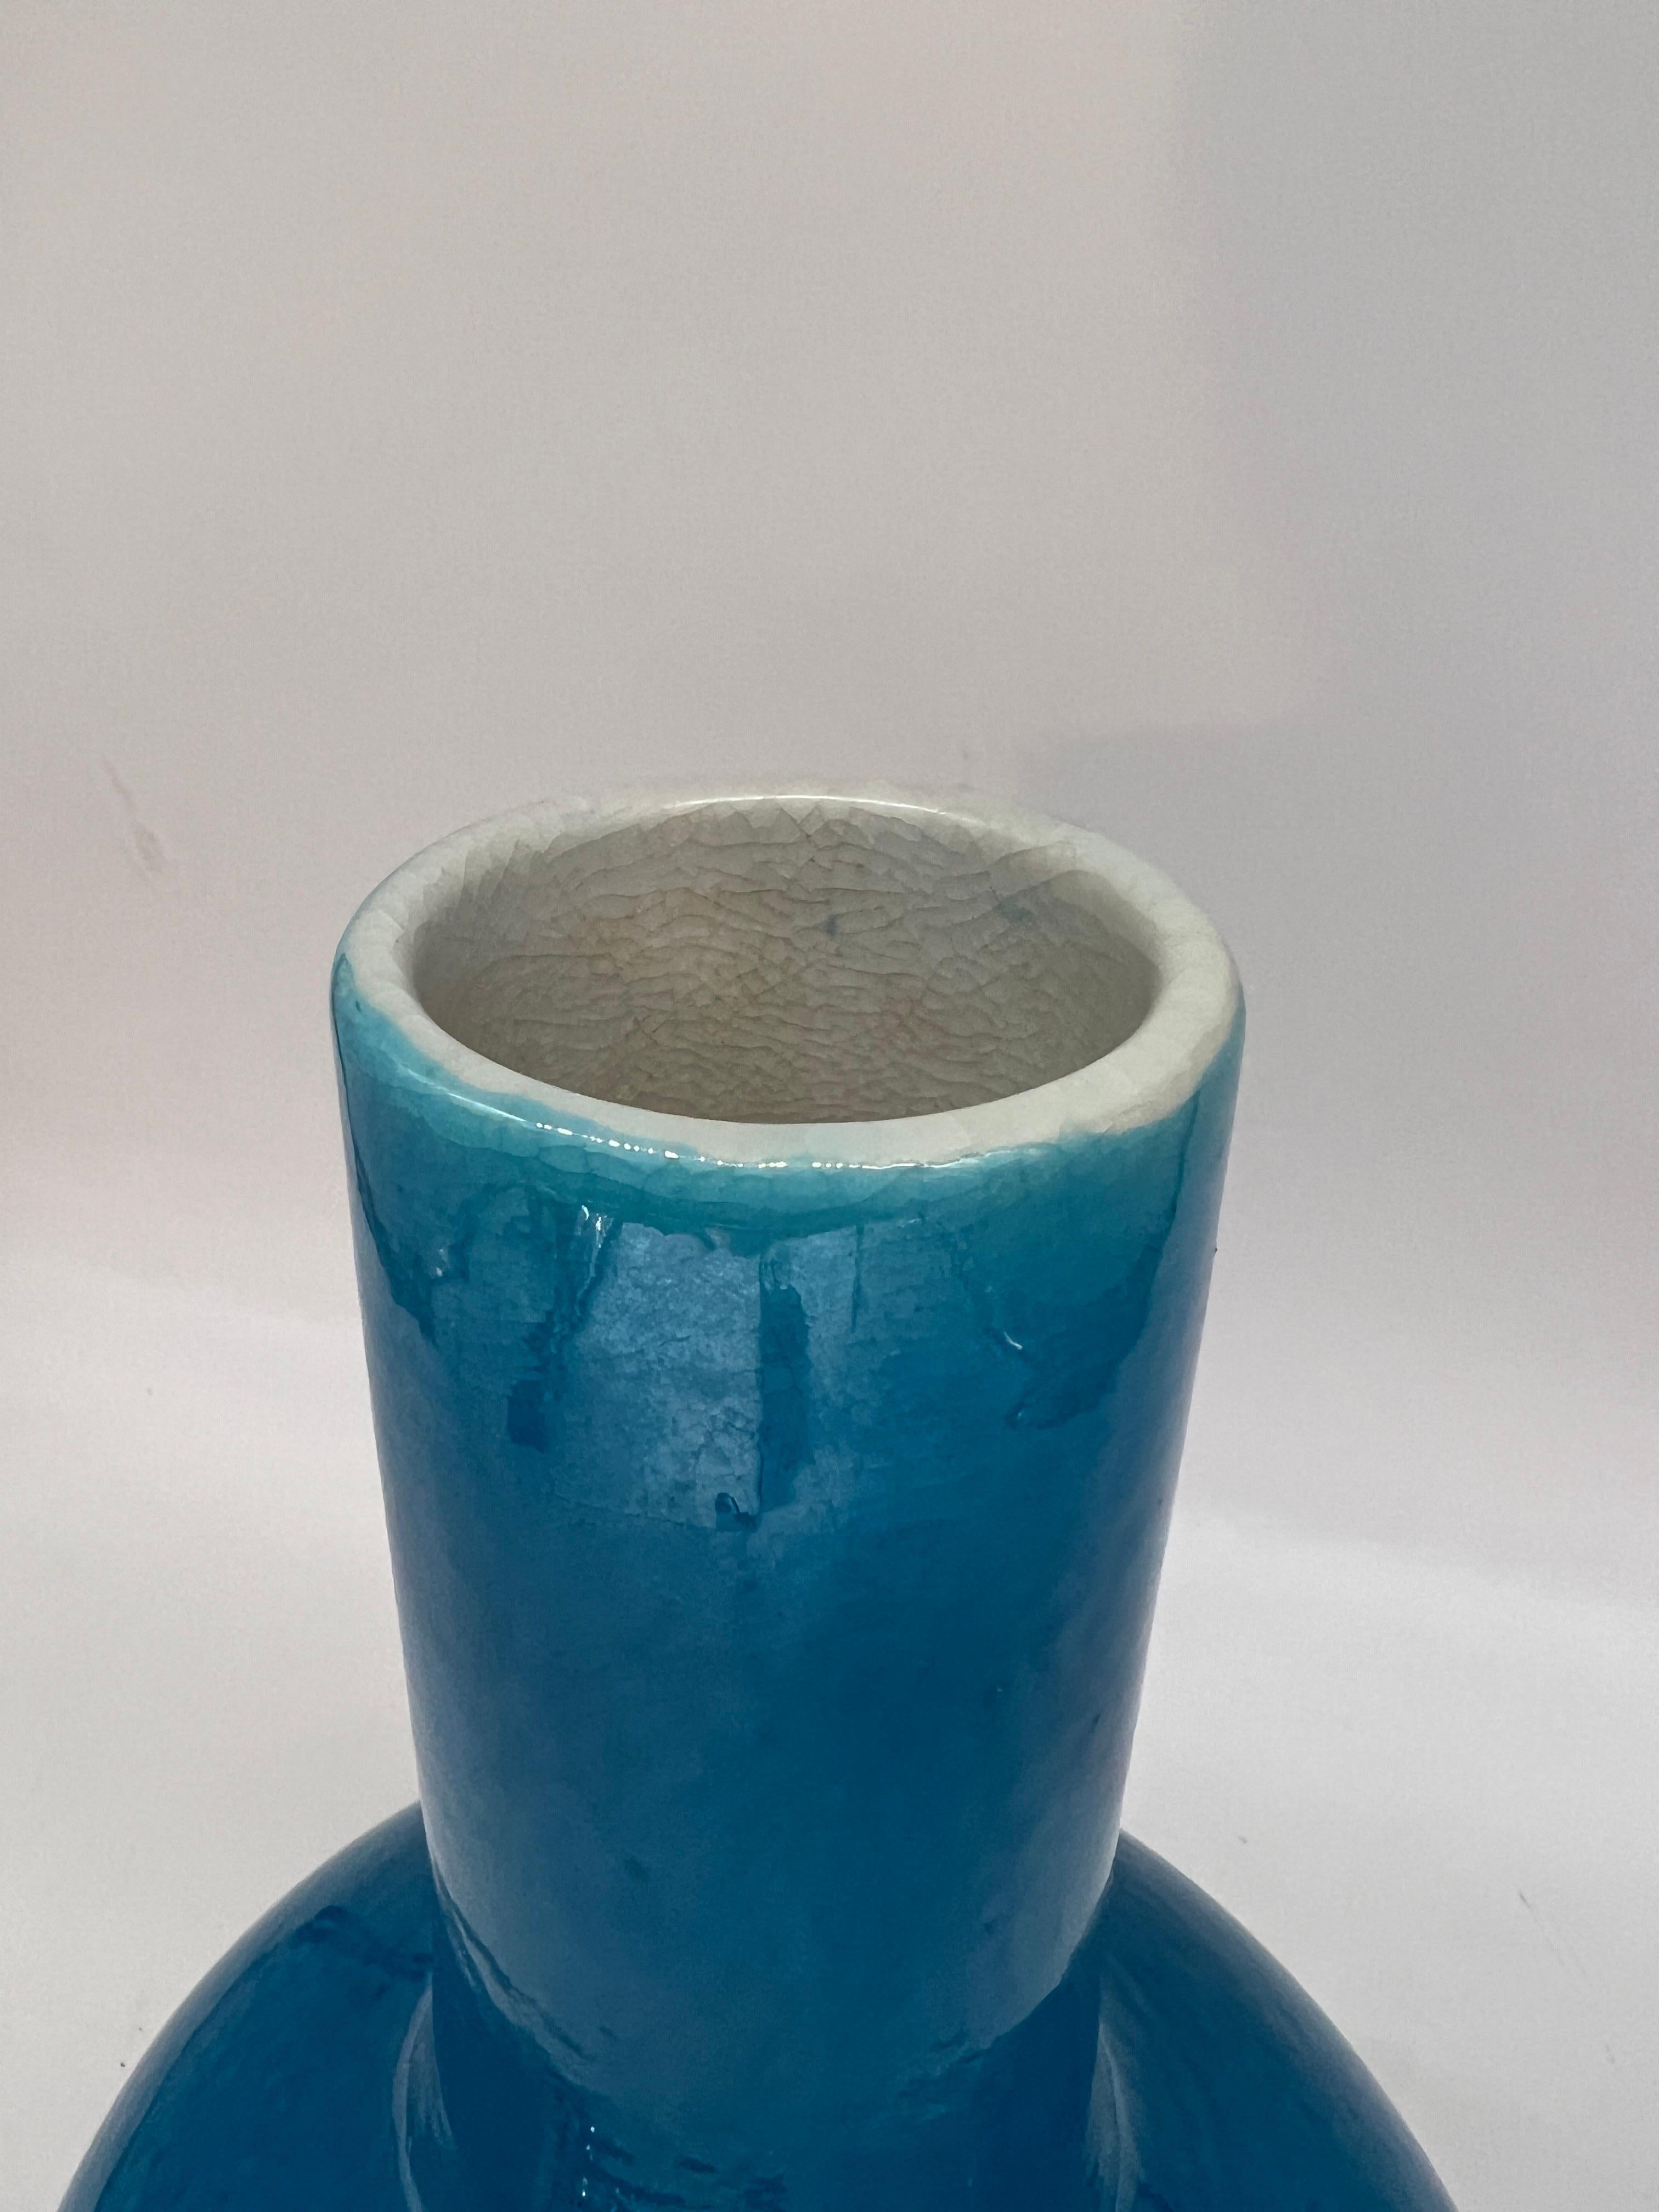 Porcelain Chinese Peacock Blue Monochrome Bottle Form Vase 14